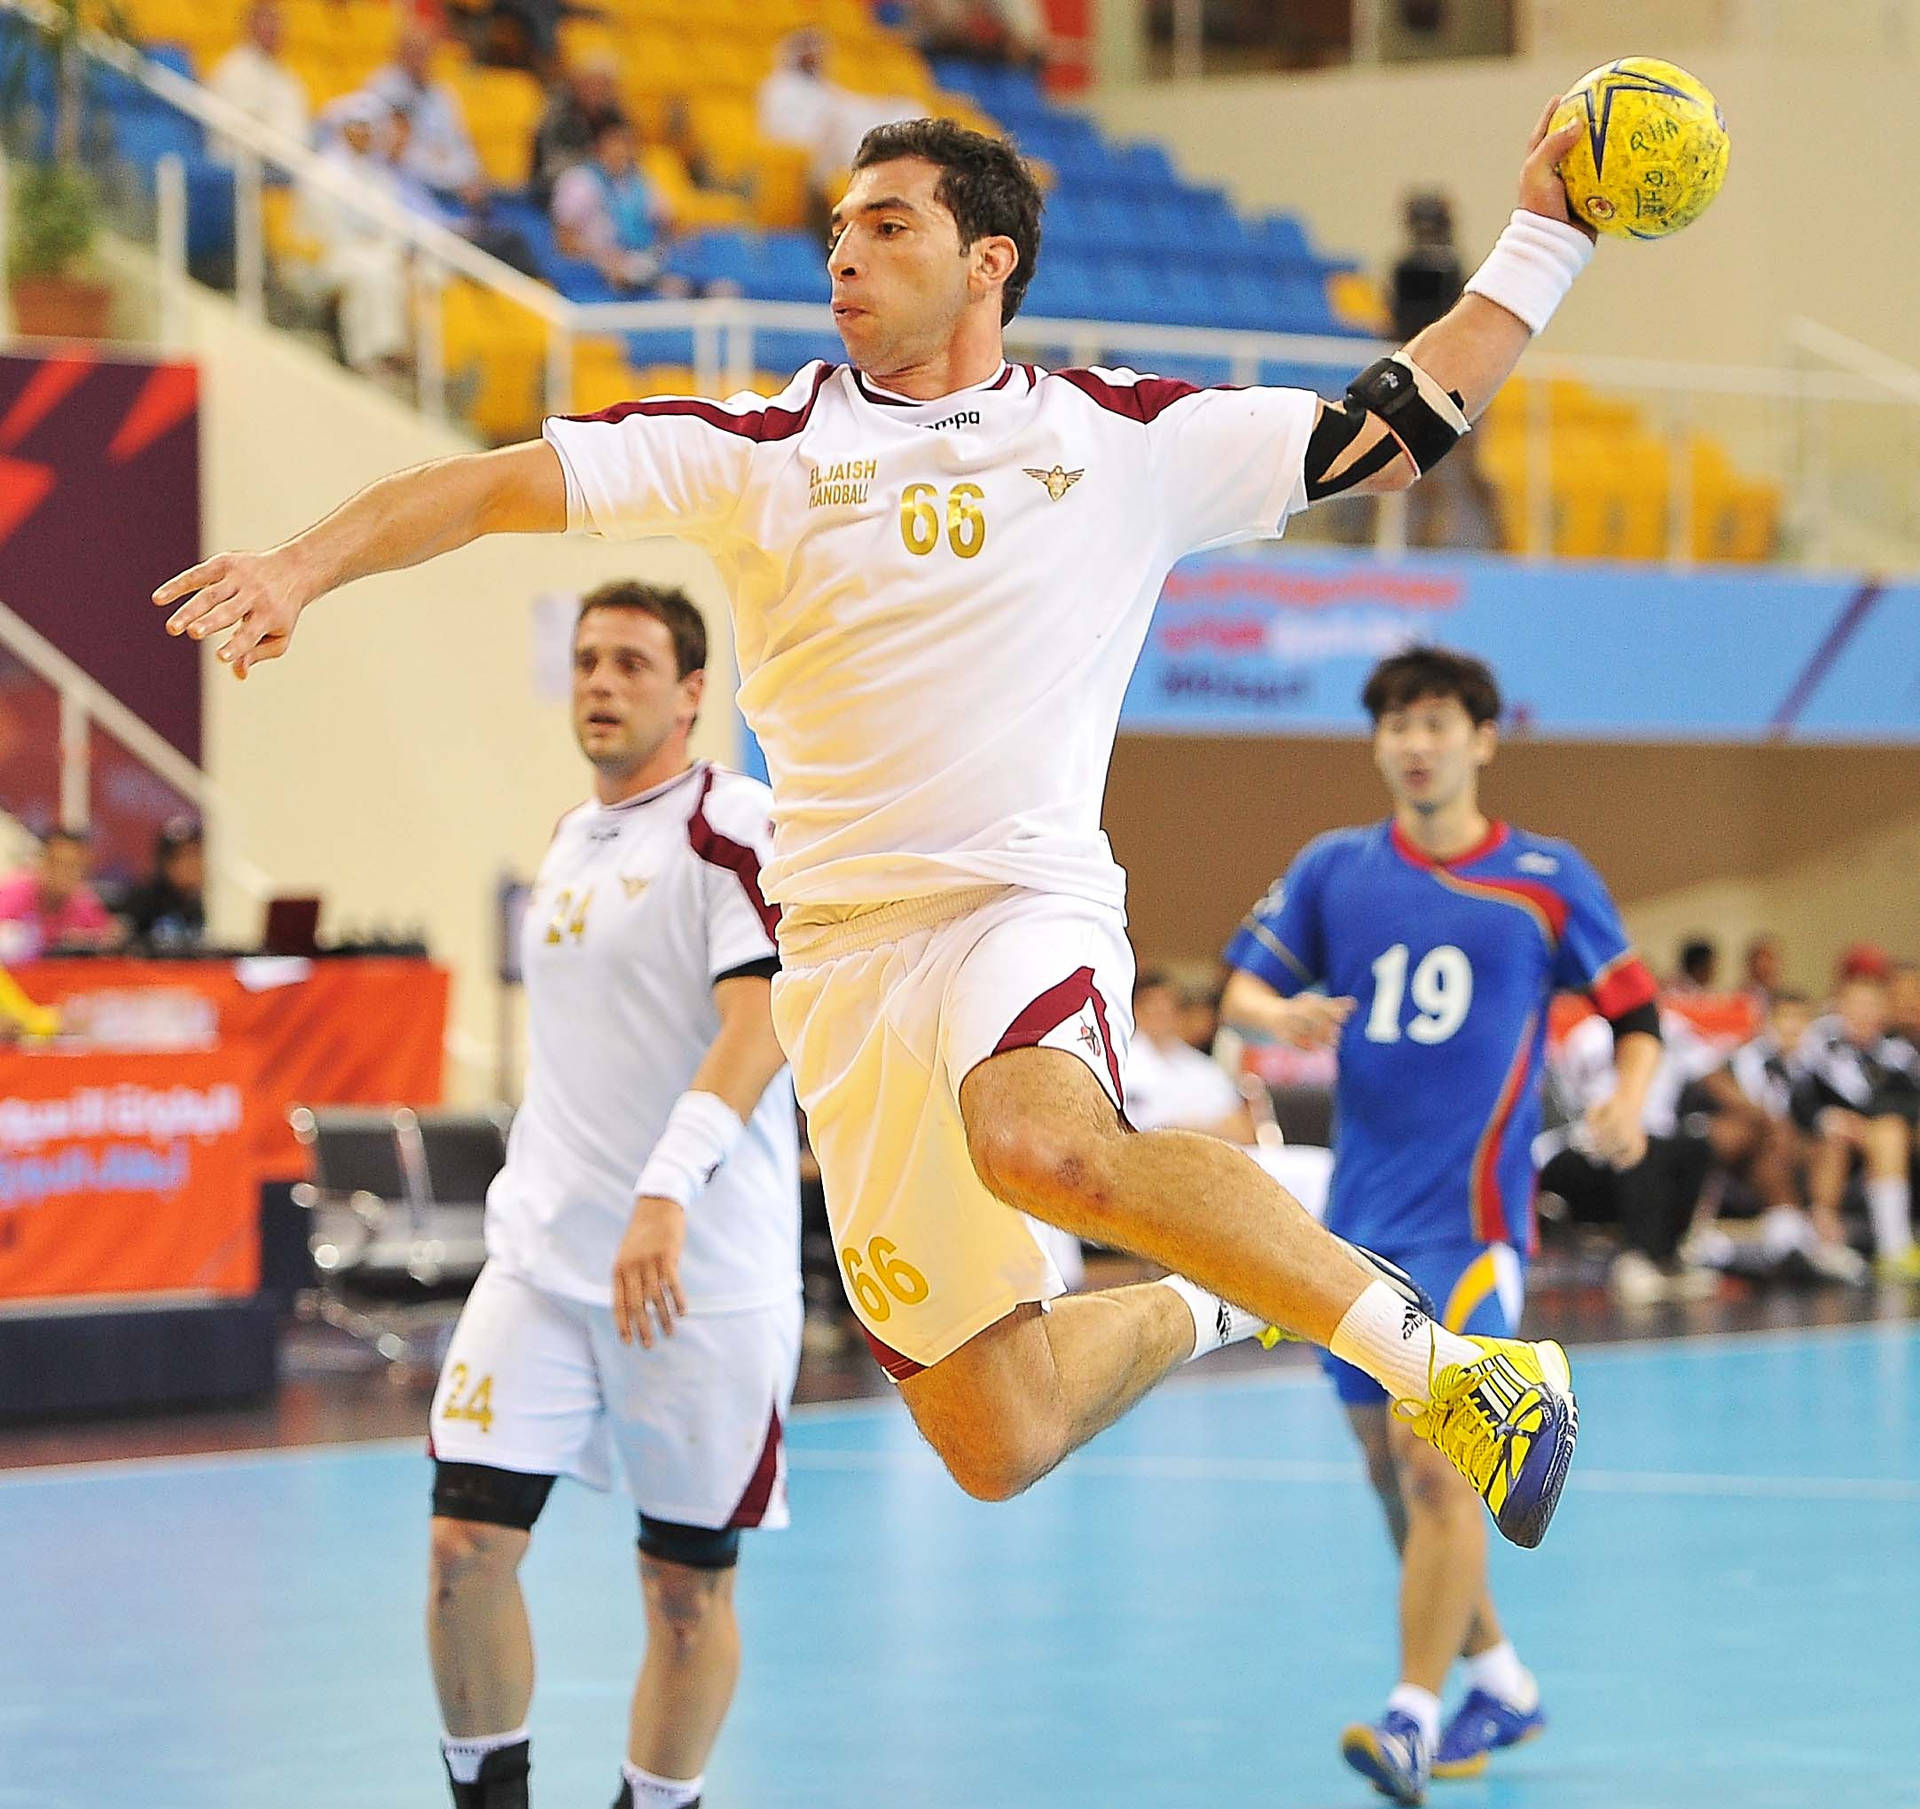 Handball Player Number 66 Background